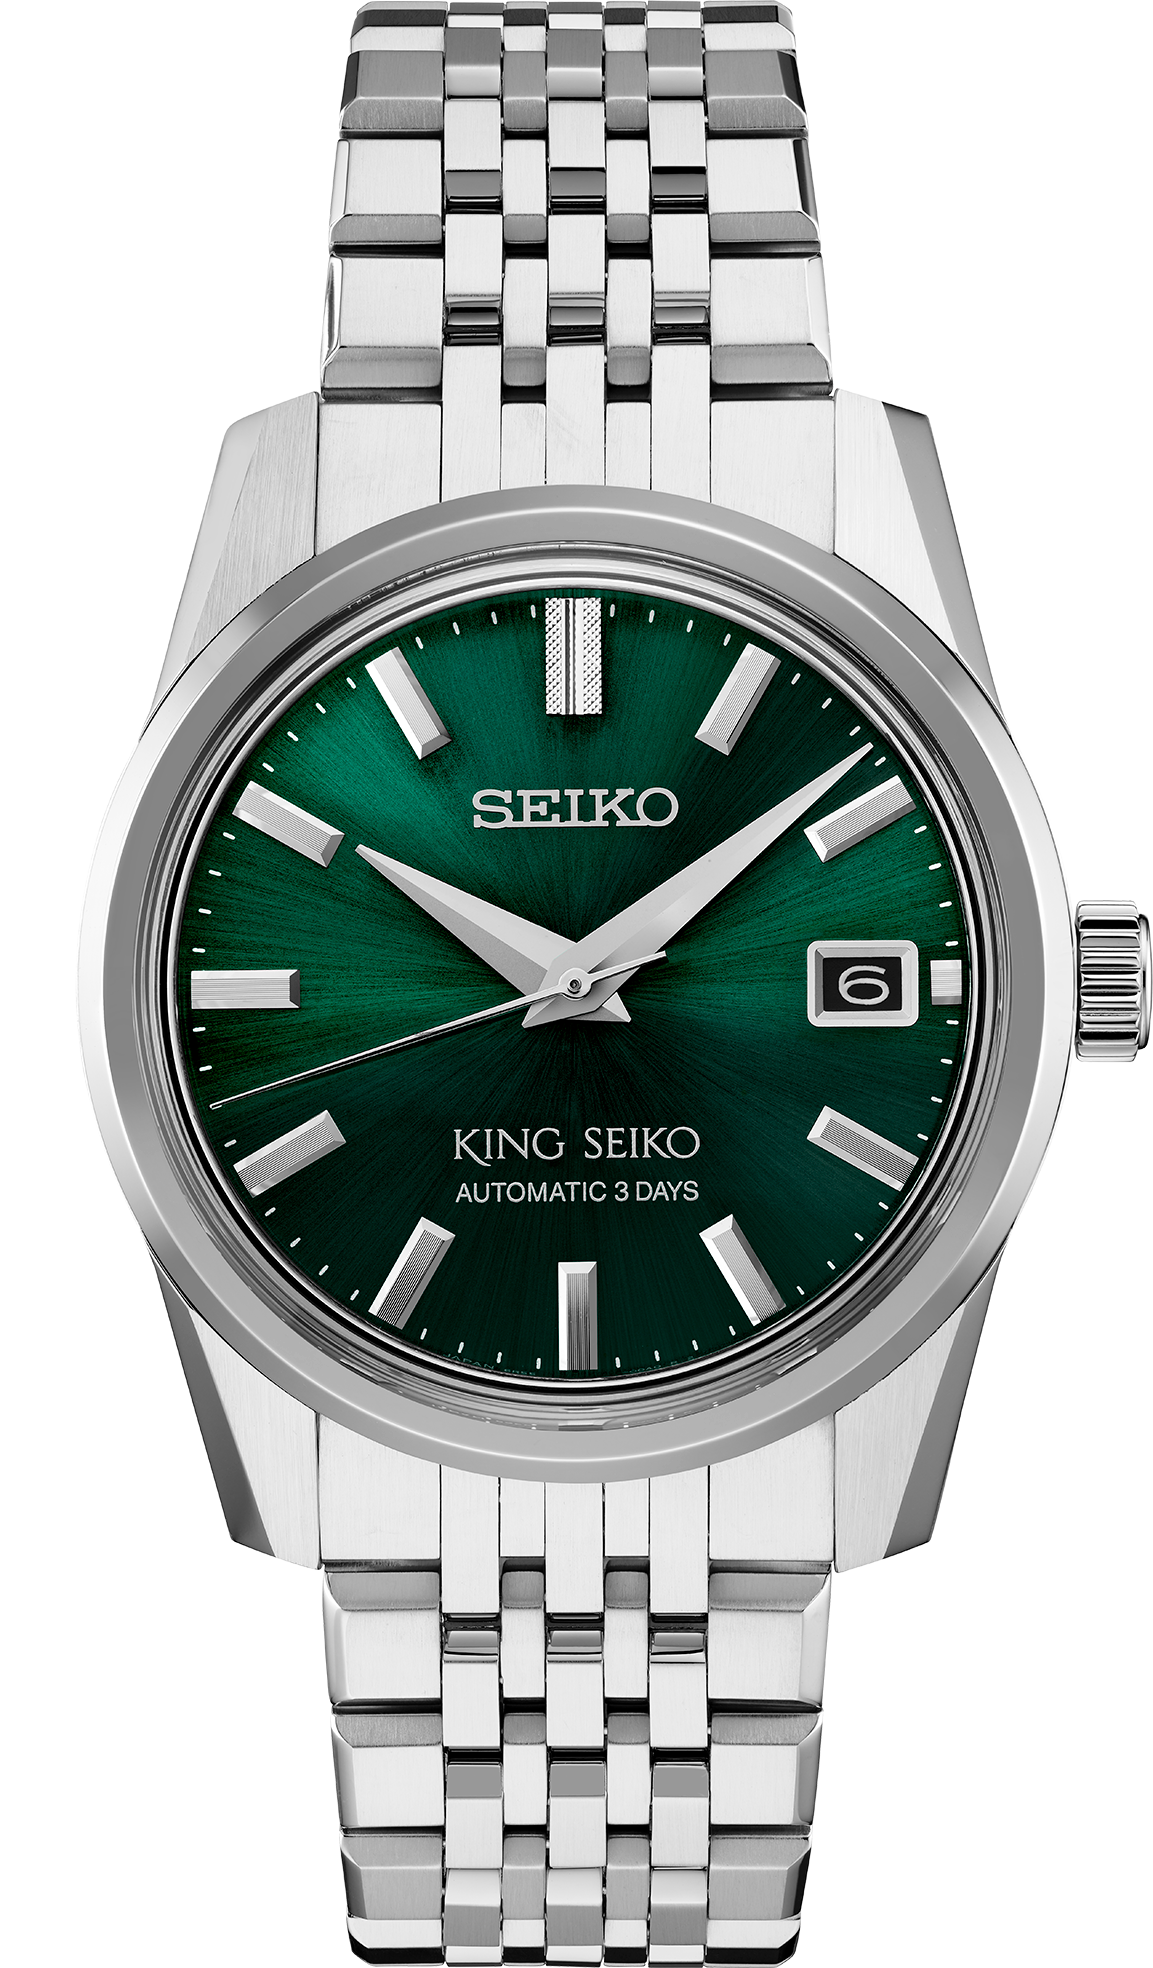 SPB373 Green dial stainless steel King Seiko front solder shot